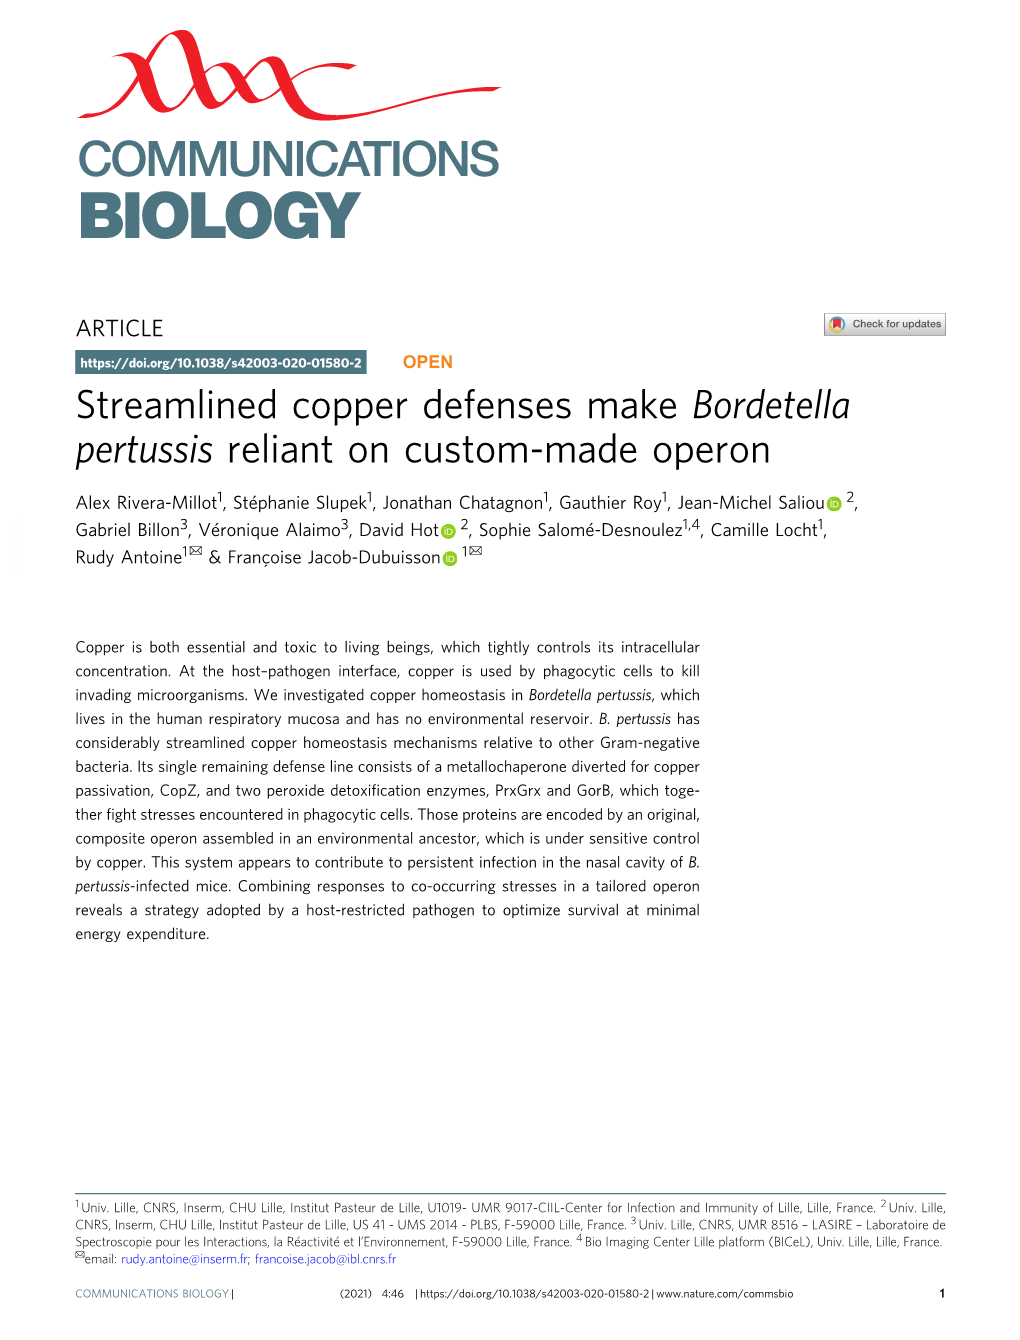 Streamlined Copper Defenses Make Bordetella Pertussis Reliant on Custom-Made Operon